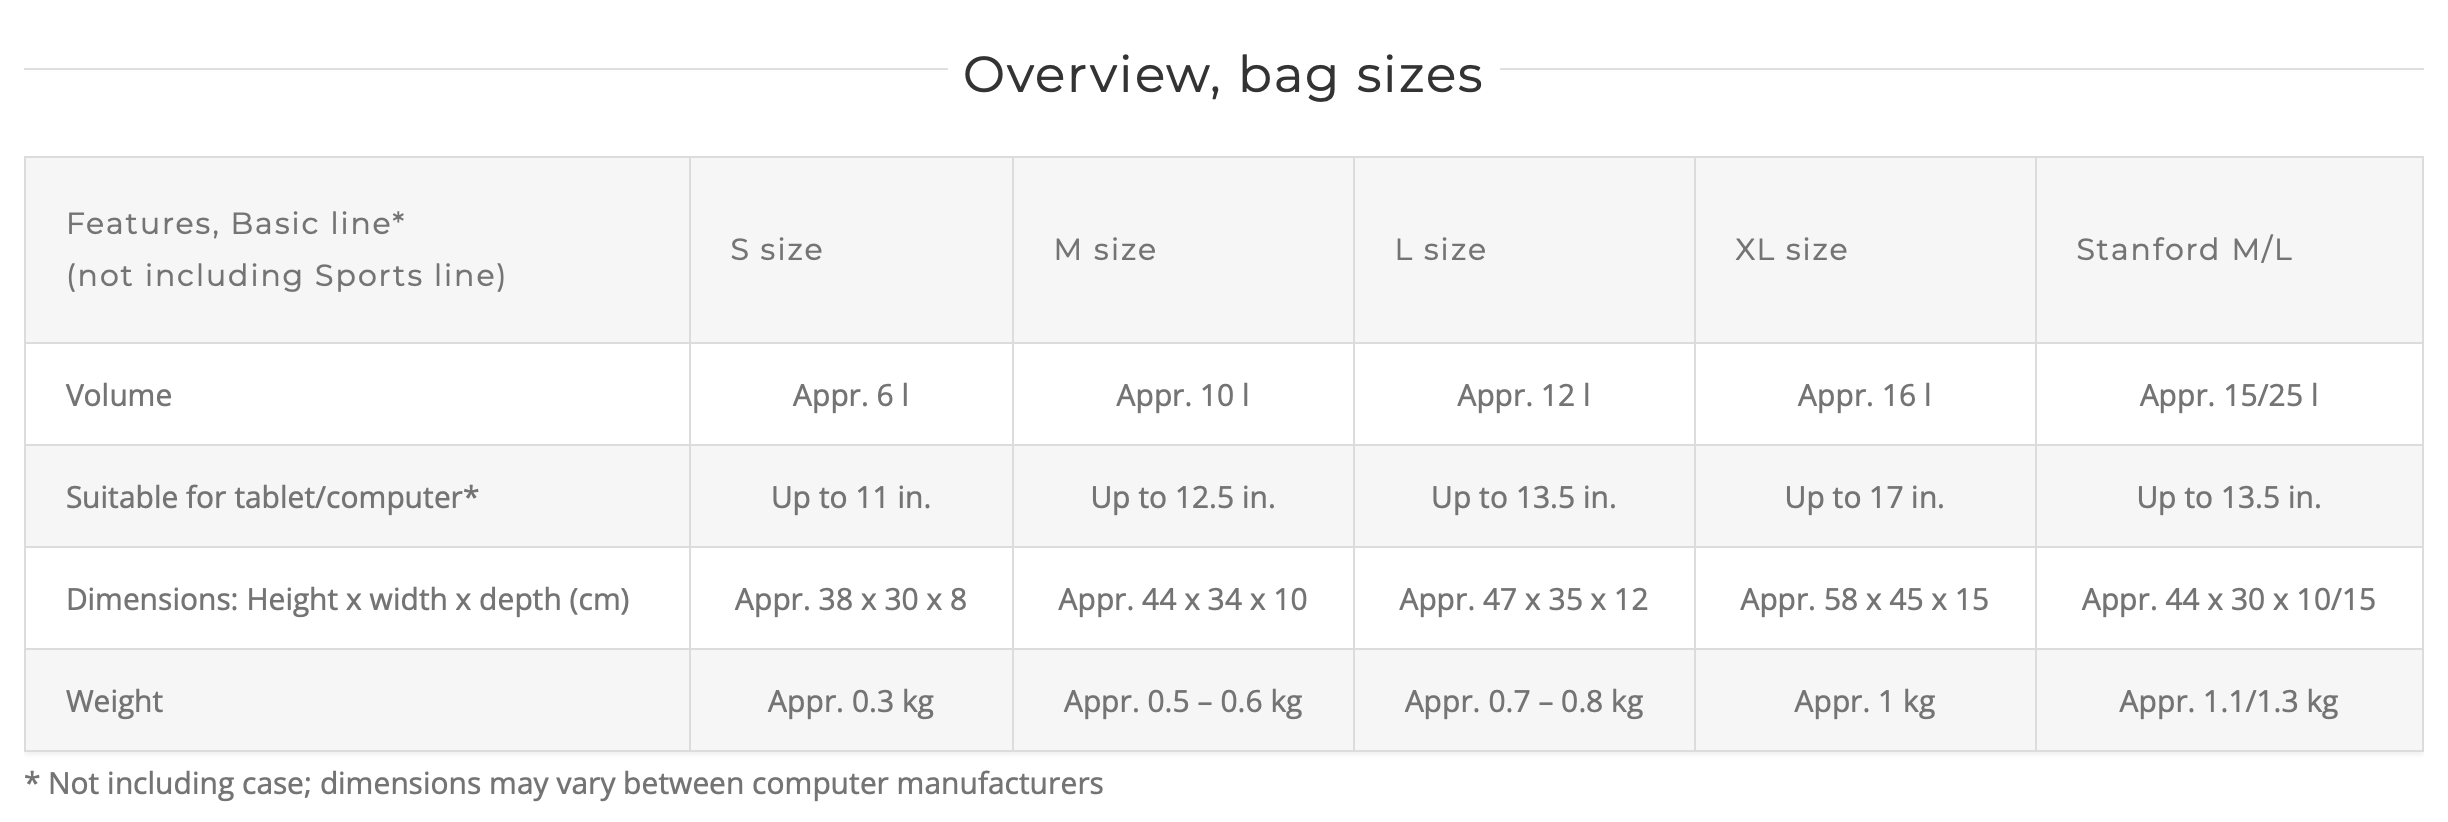 Bag sizes chart